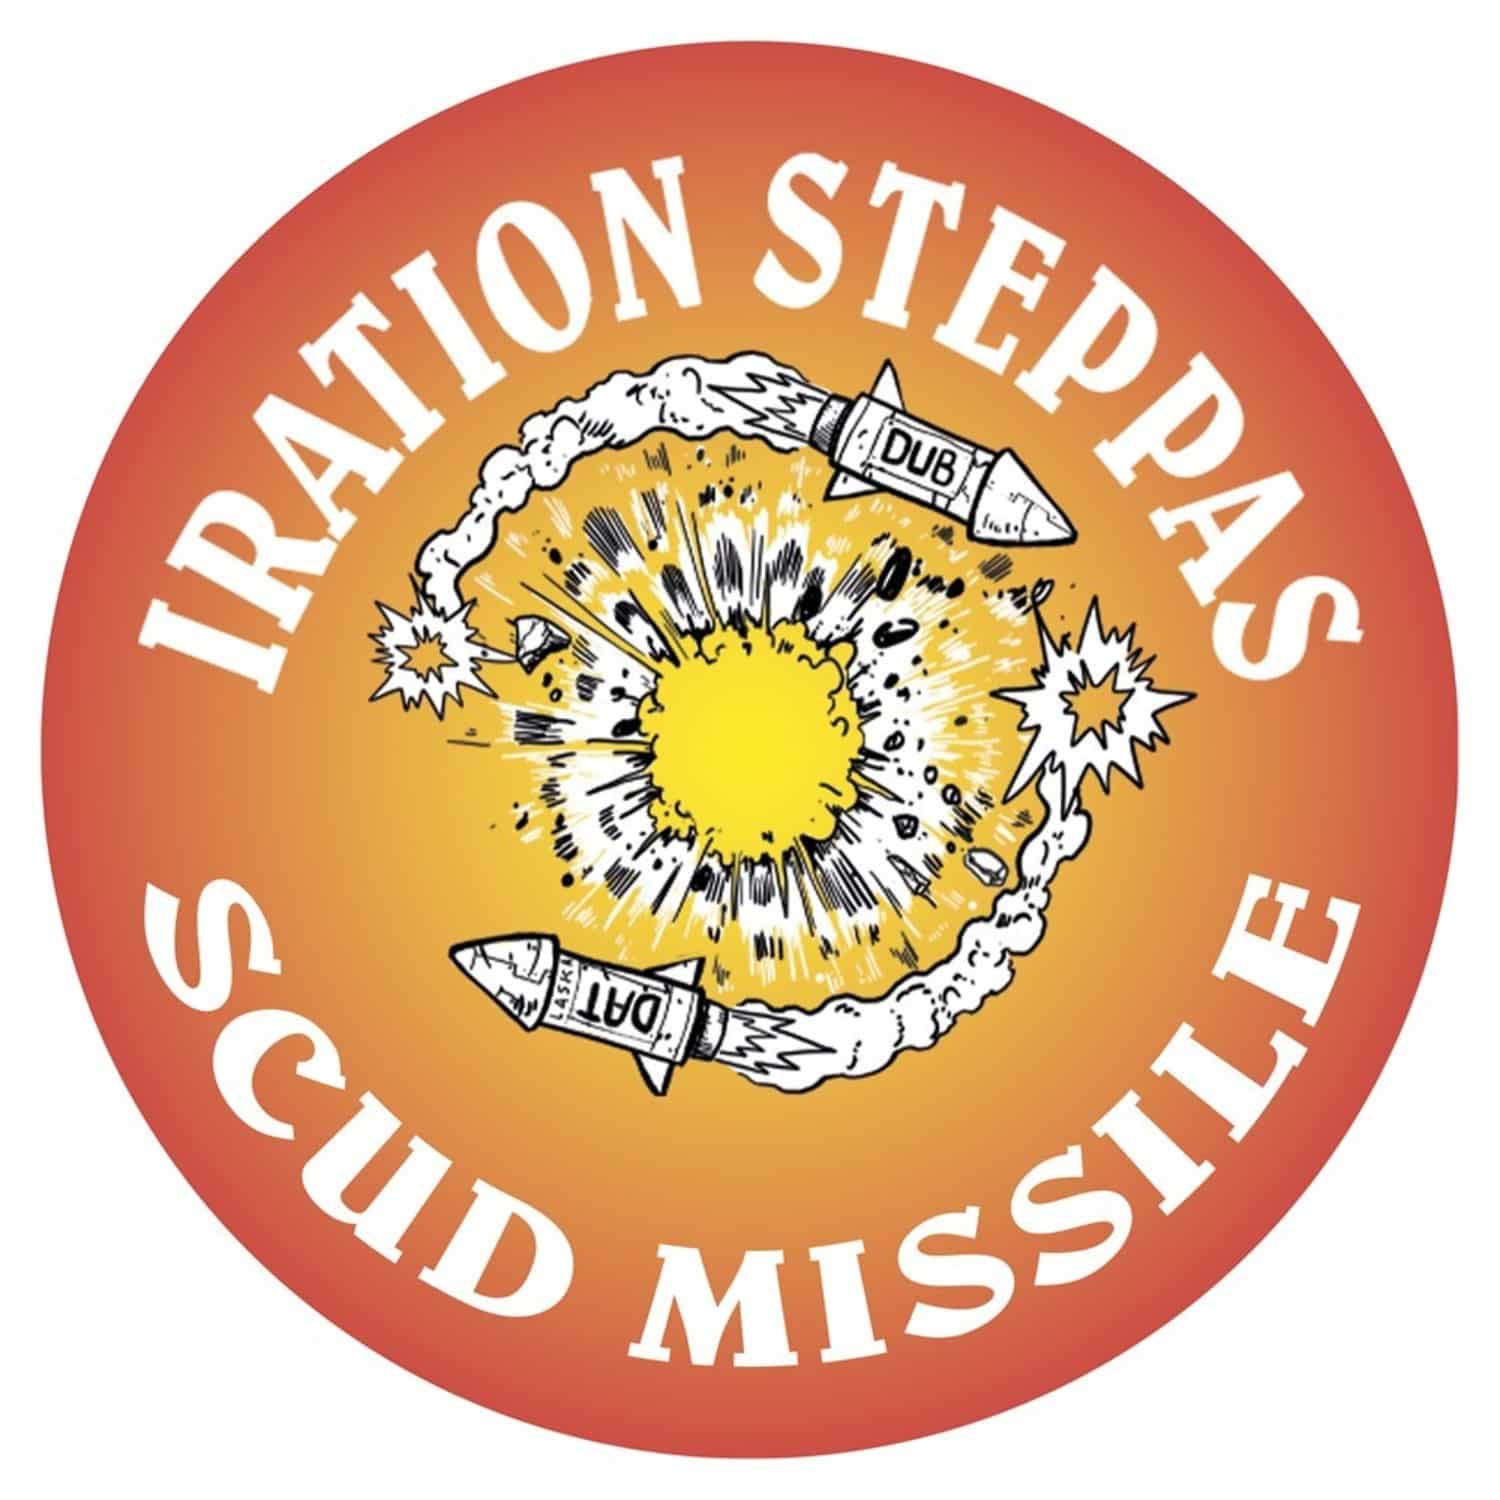 Iration Steppas - SCUD MISSILE